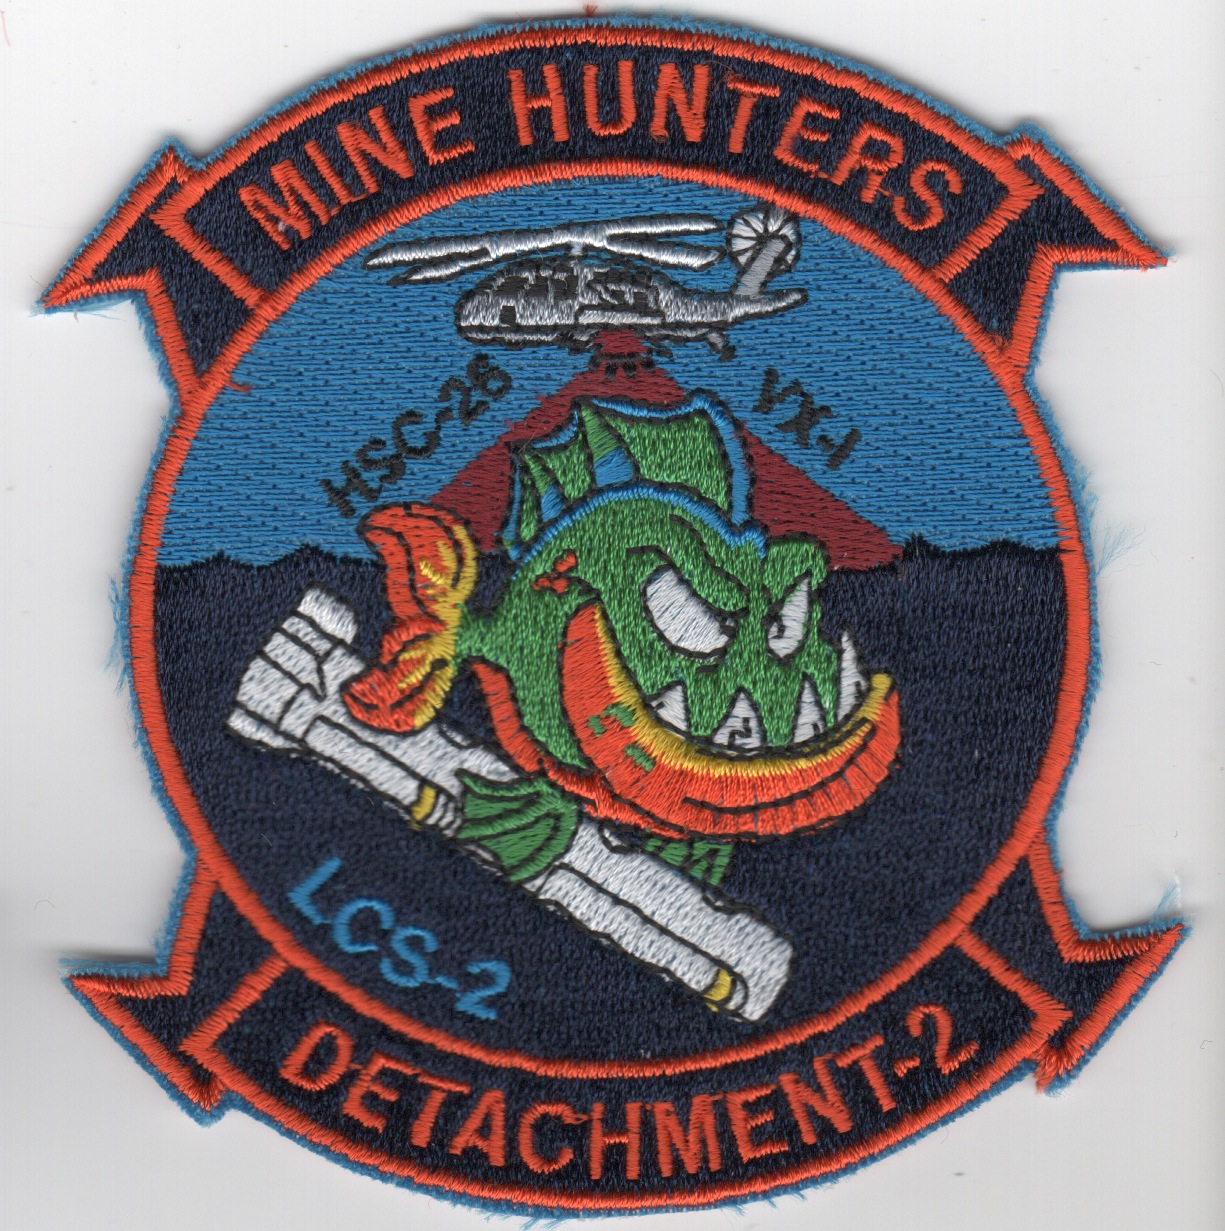 HSC-26 Det-2 'Minehunters' Patch